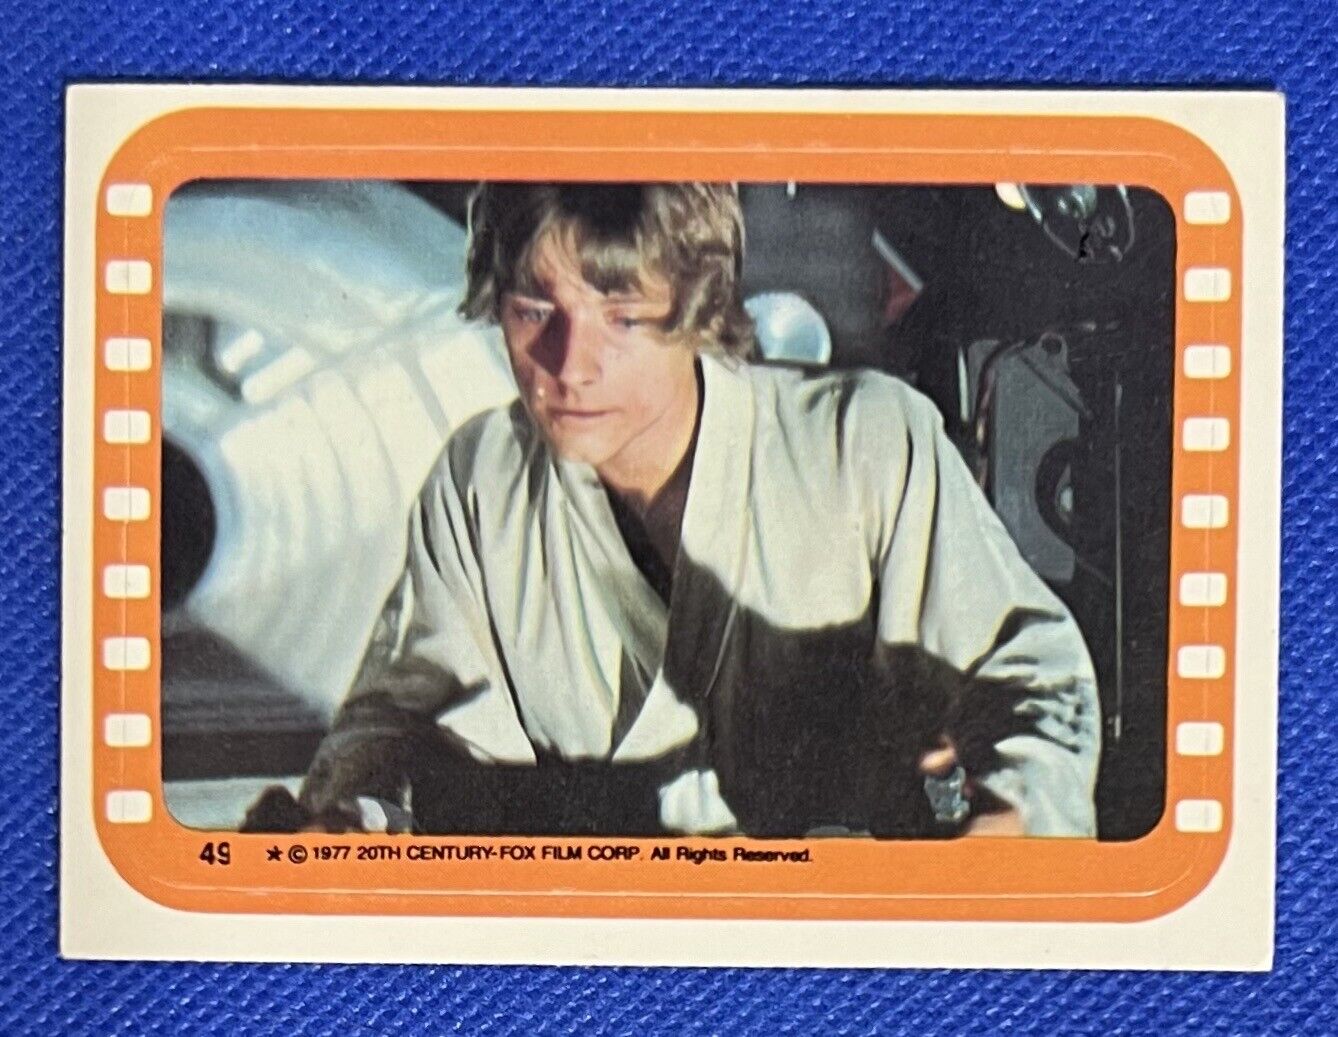 STAR WARS sticker/card #49 Topps 1977